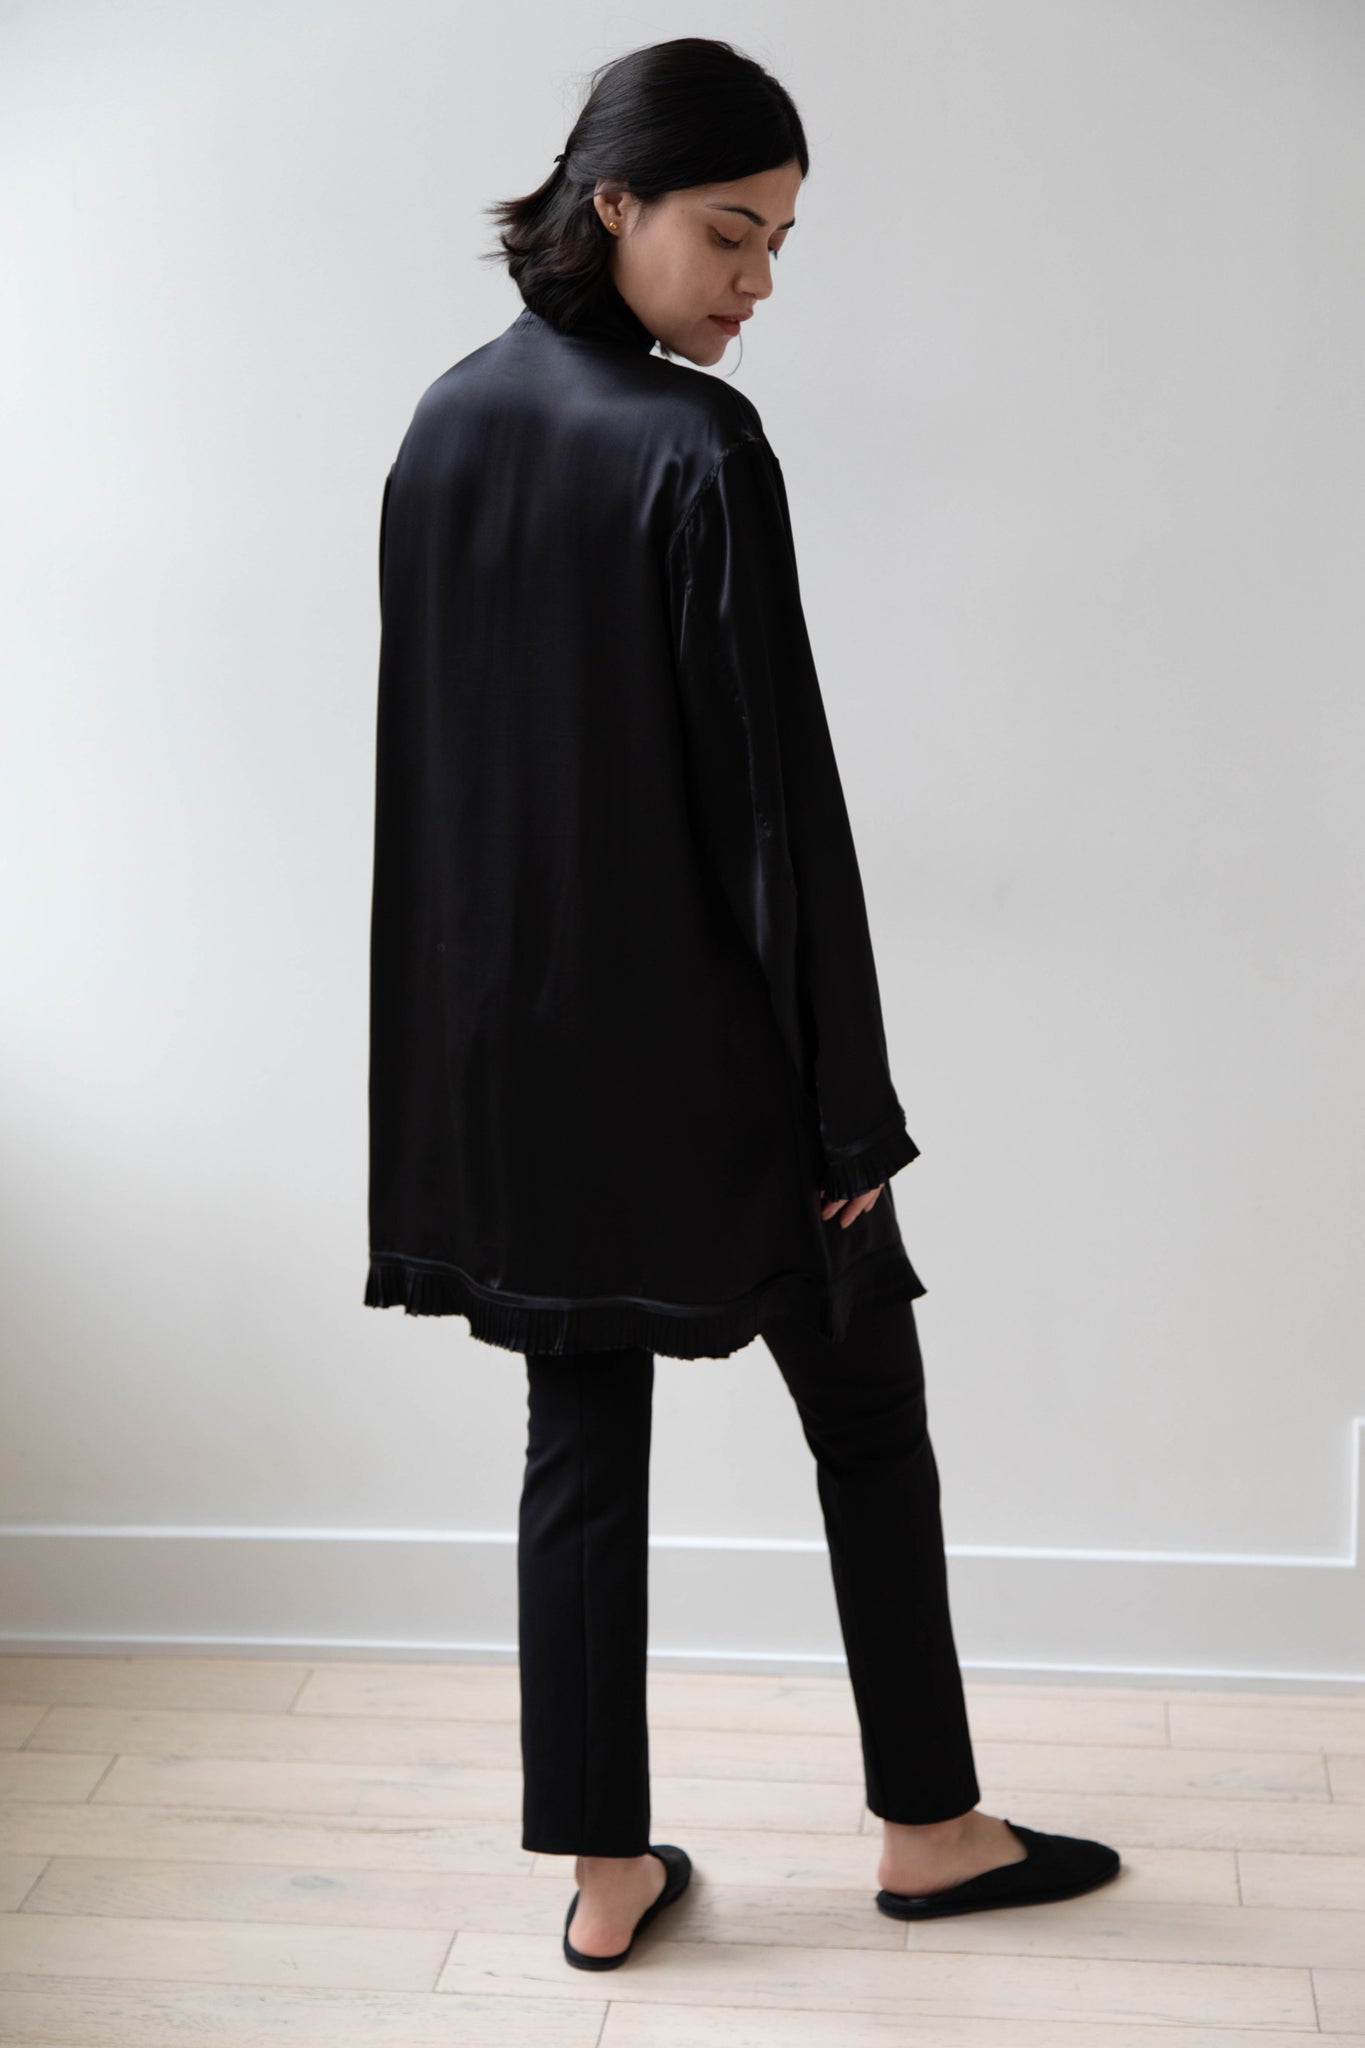 Anaak | Pavel Satin Silk Tuxedo Dress in Onyx